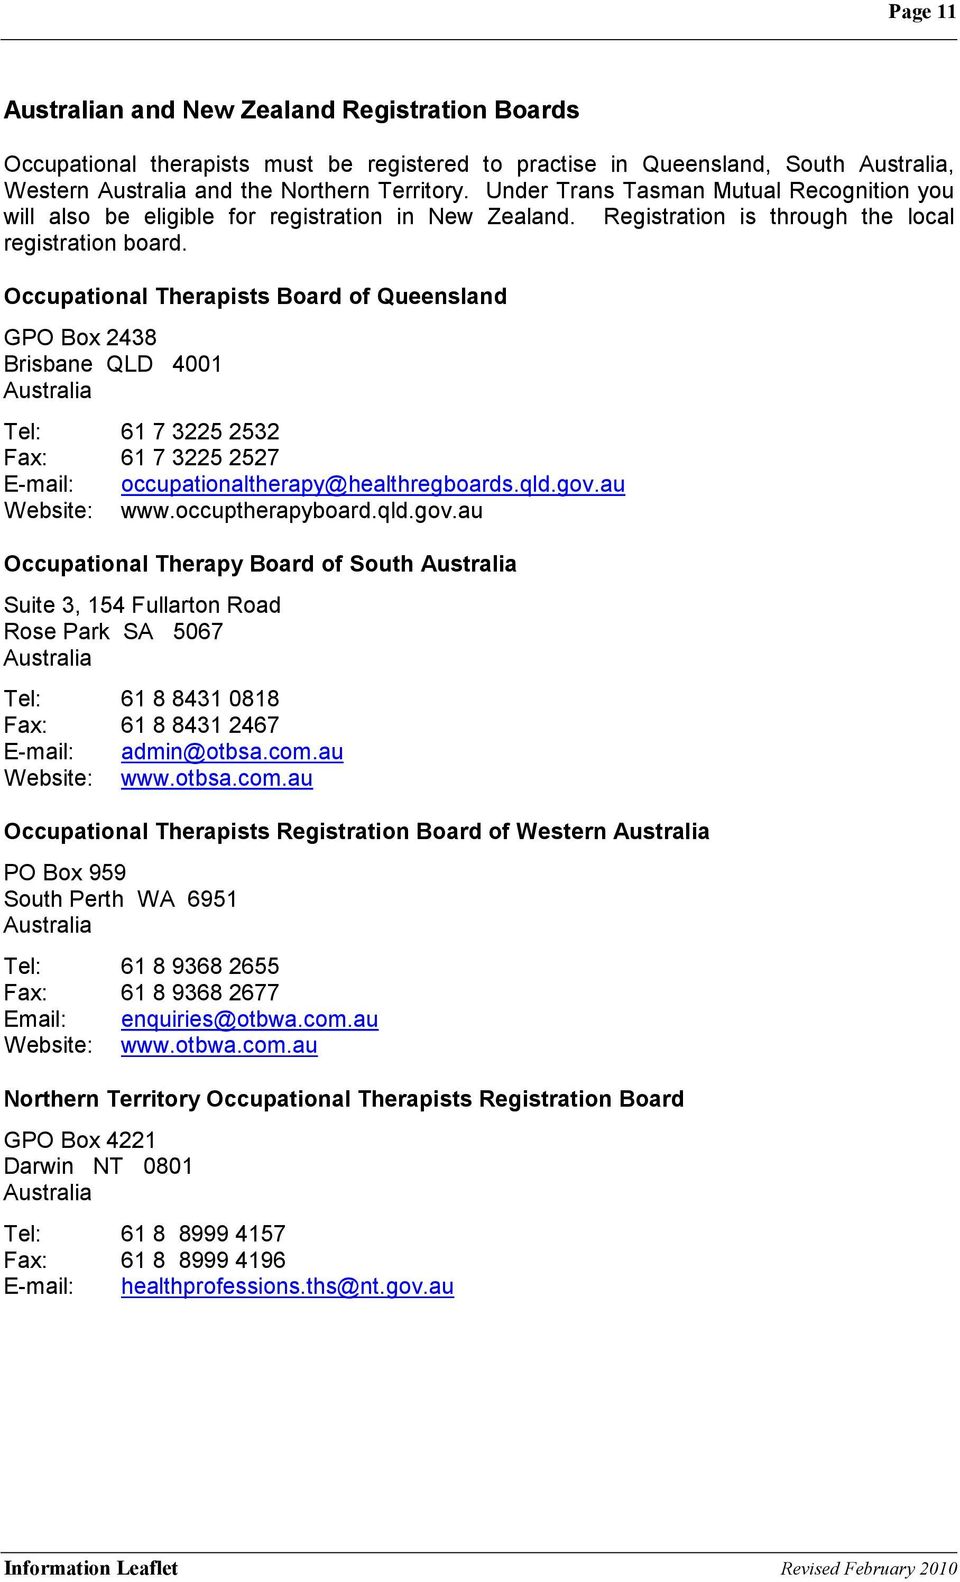 Occupational Therapists Board of Queensland GPO Box 2438 Brisbane QLD 4001 Australia Tel: 61 7 3225 2532 Fax: 61 7 3225 2527 E-mail: occupationaltherapy@healthregboards.qld.gov.au Website: www.